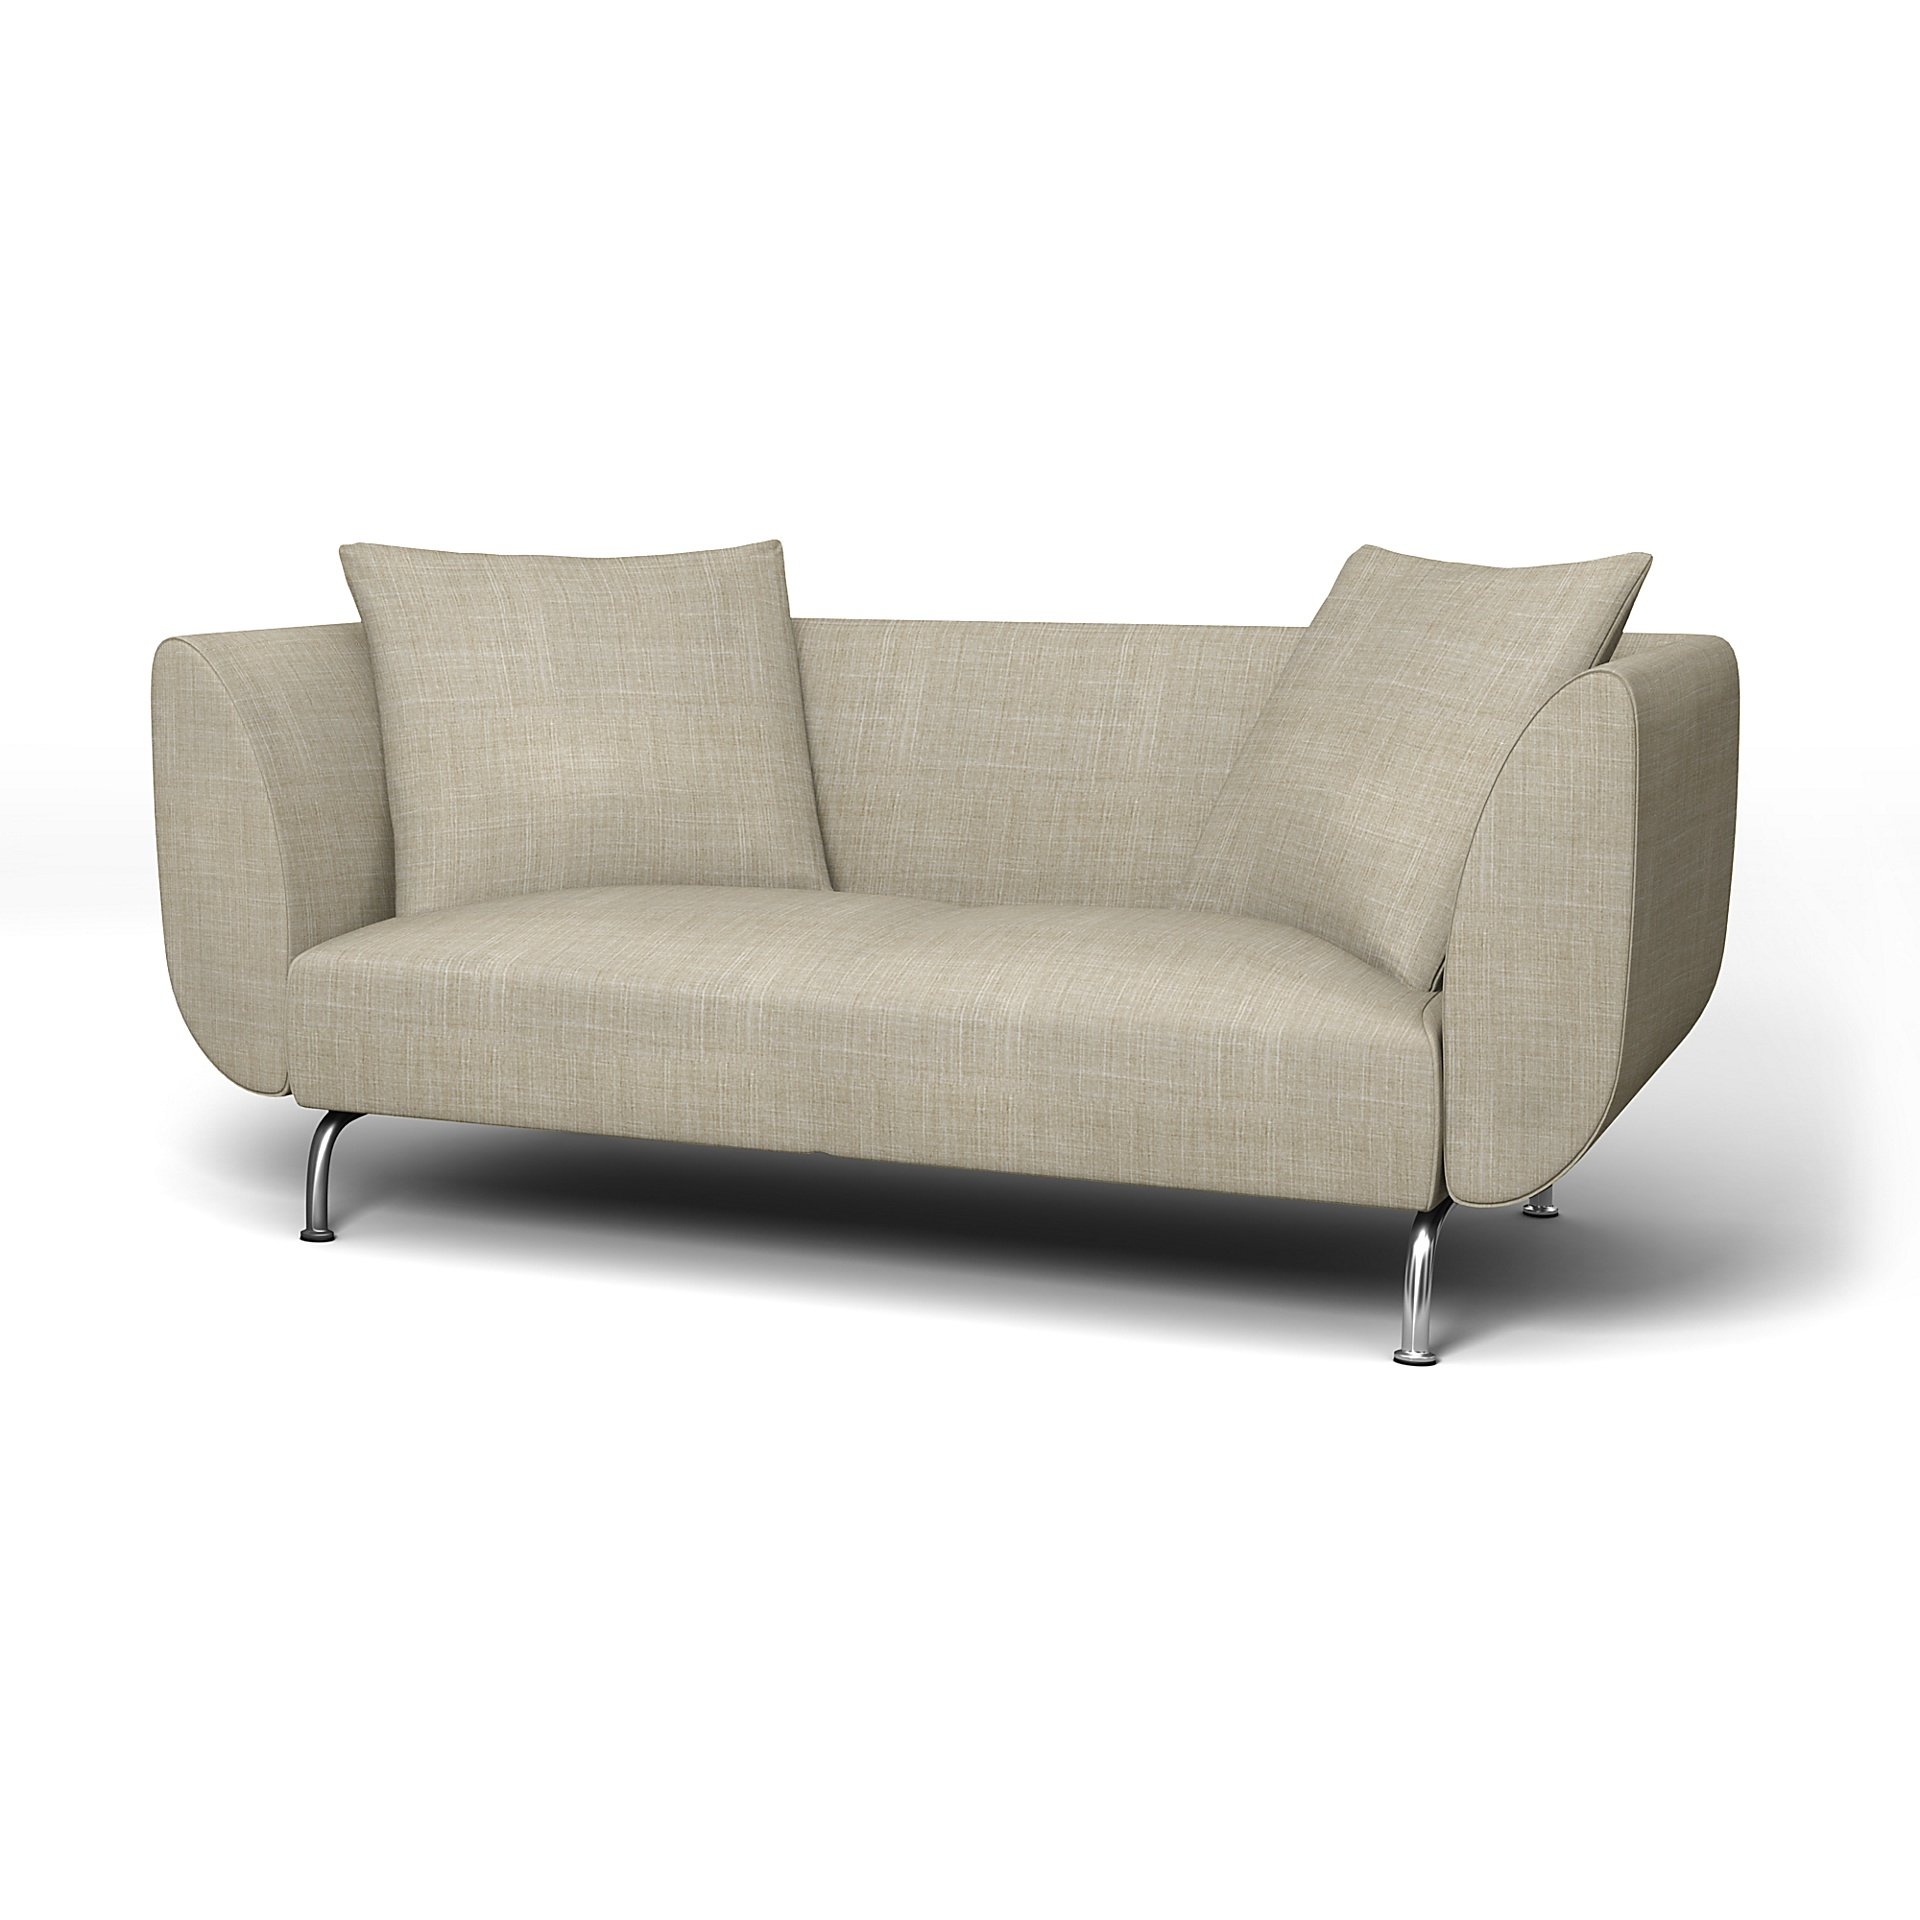 IKEA - Stromstad 2 Seater Sofa Cover, Sand Beige, Boucle & Texture - Bemz